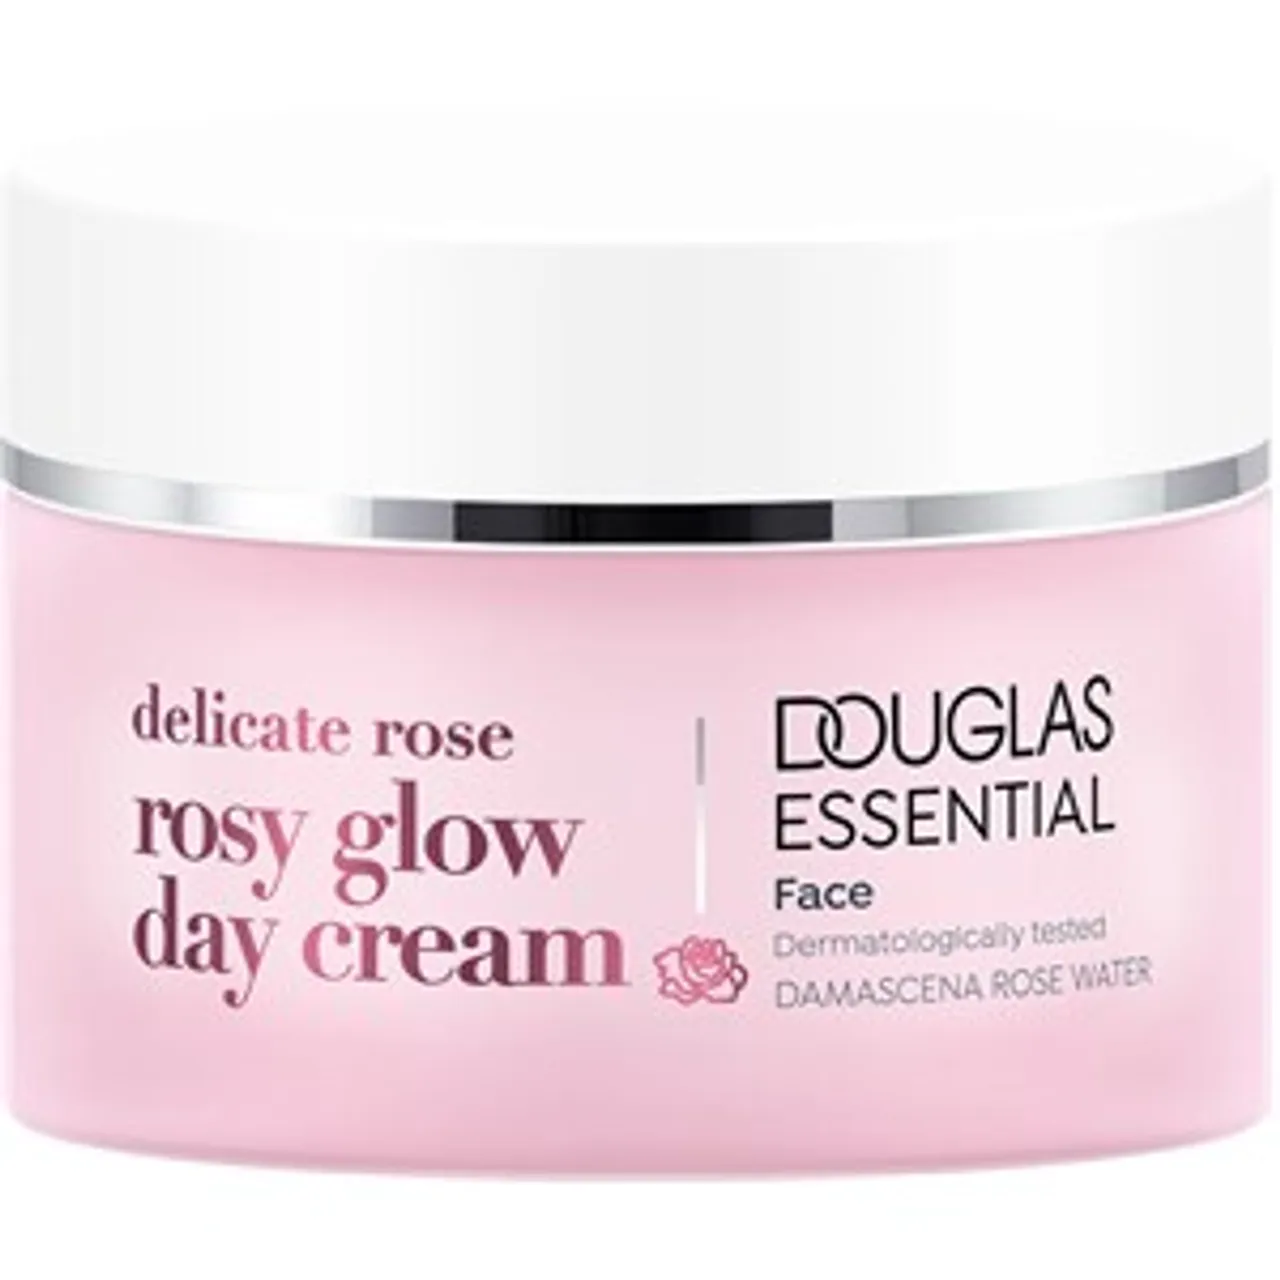 Douglas Collection Pflege Delicate Rose Rosy Glow Day Cream Gesichtscreme Damen